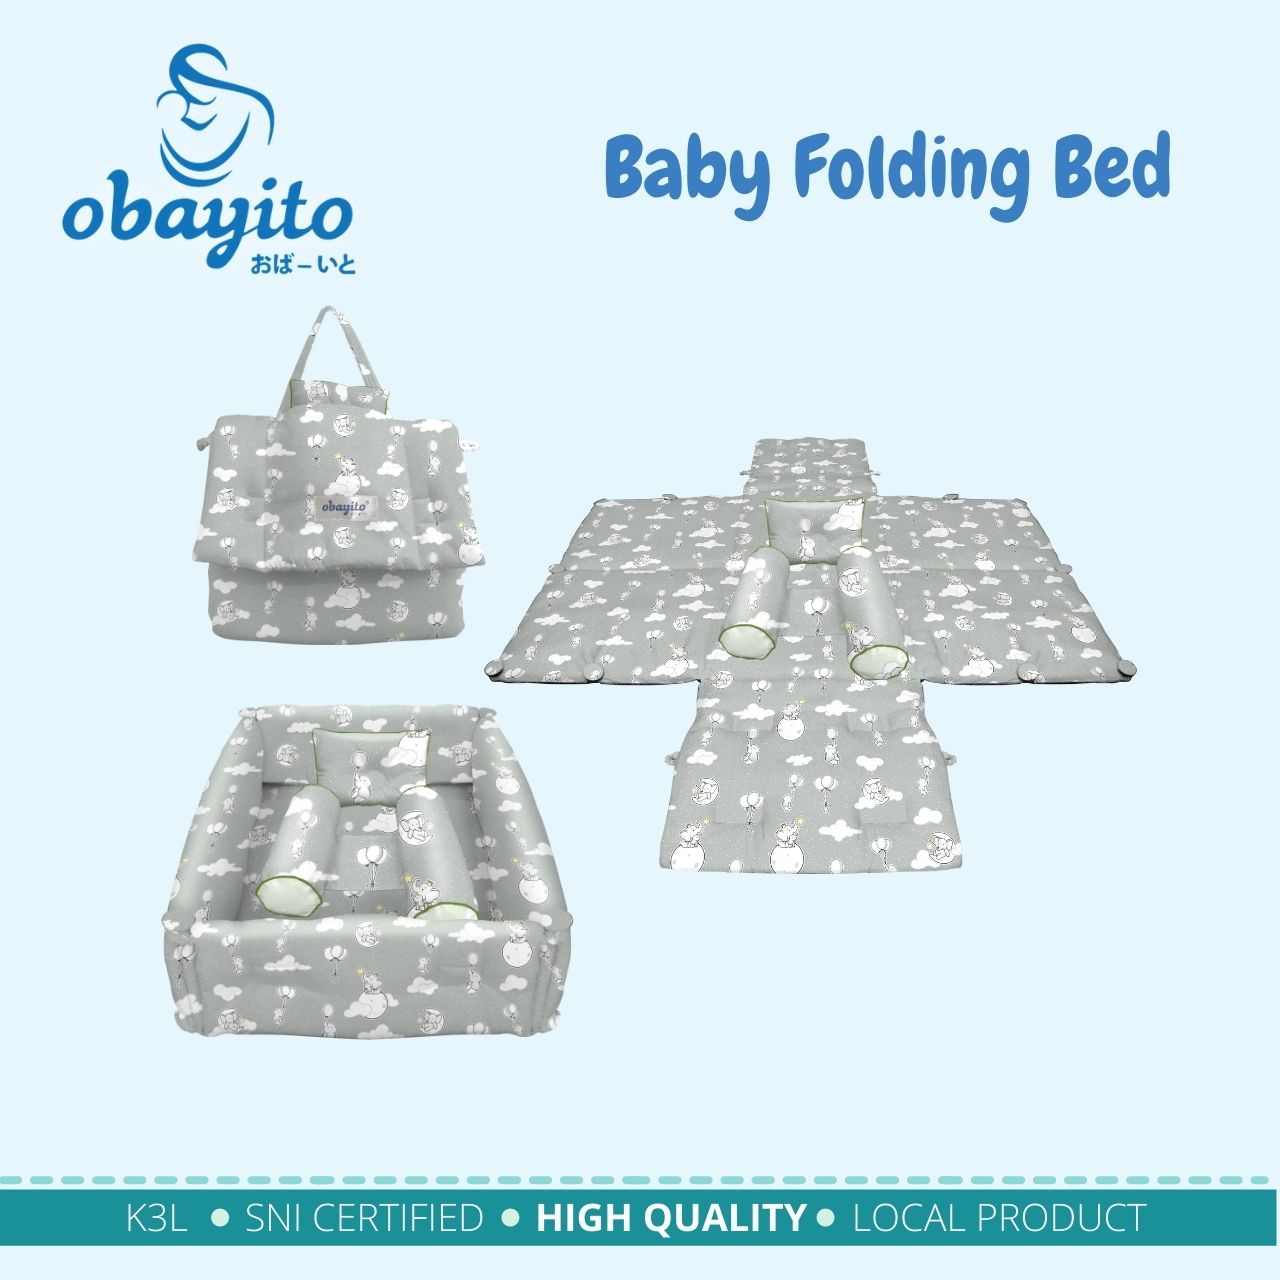 Baby Folding Bed Obayito